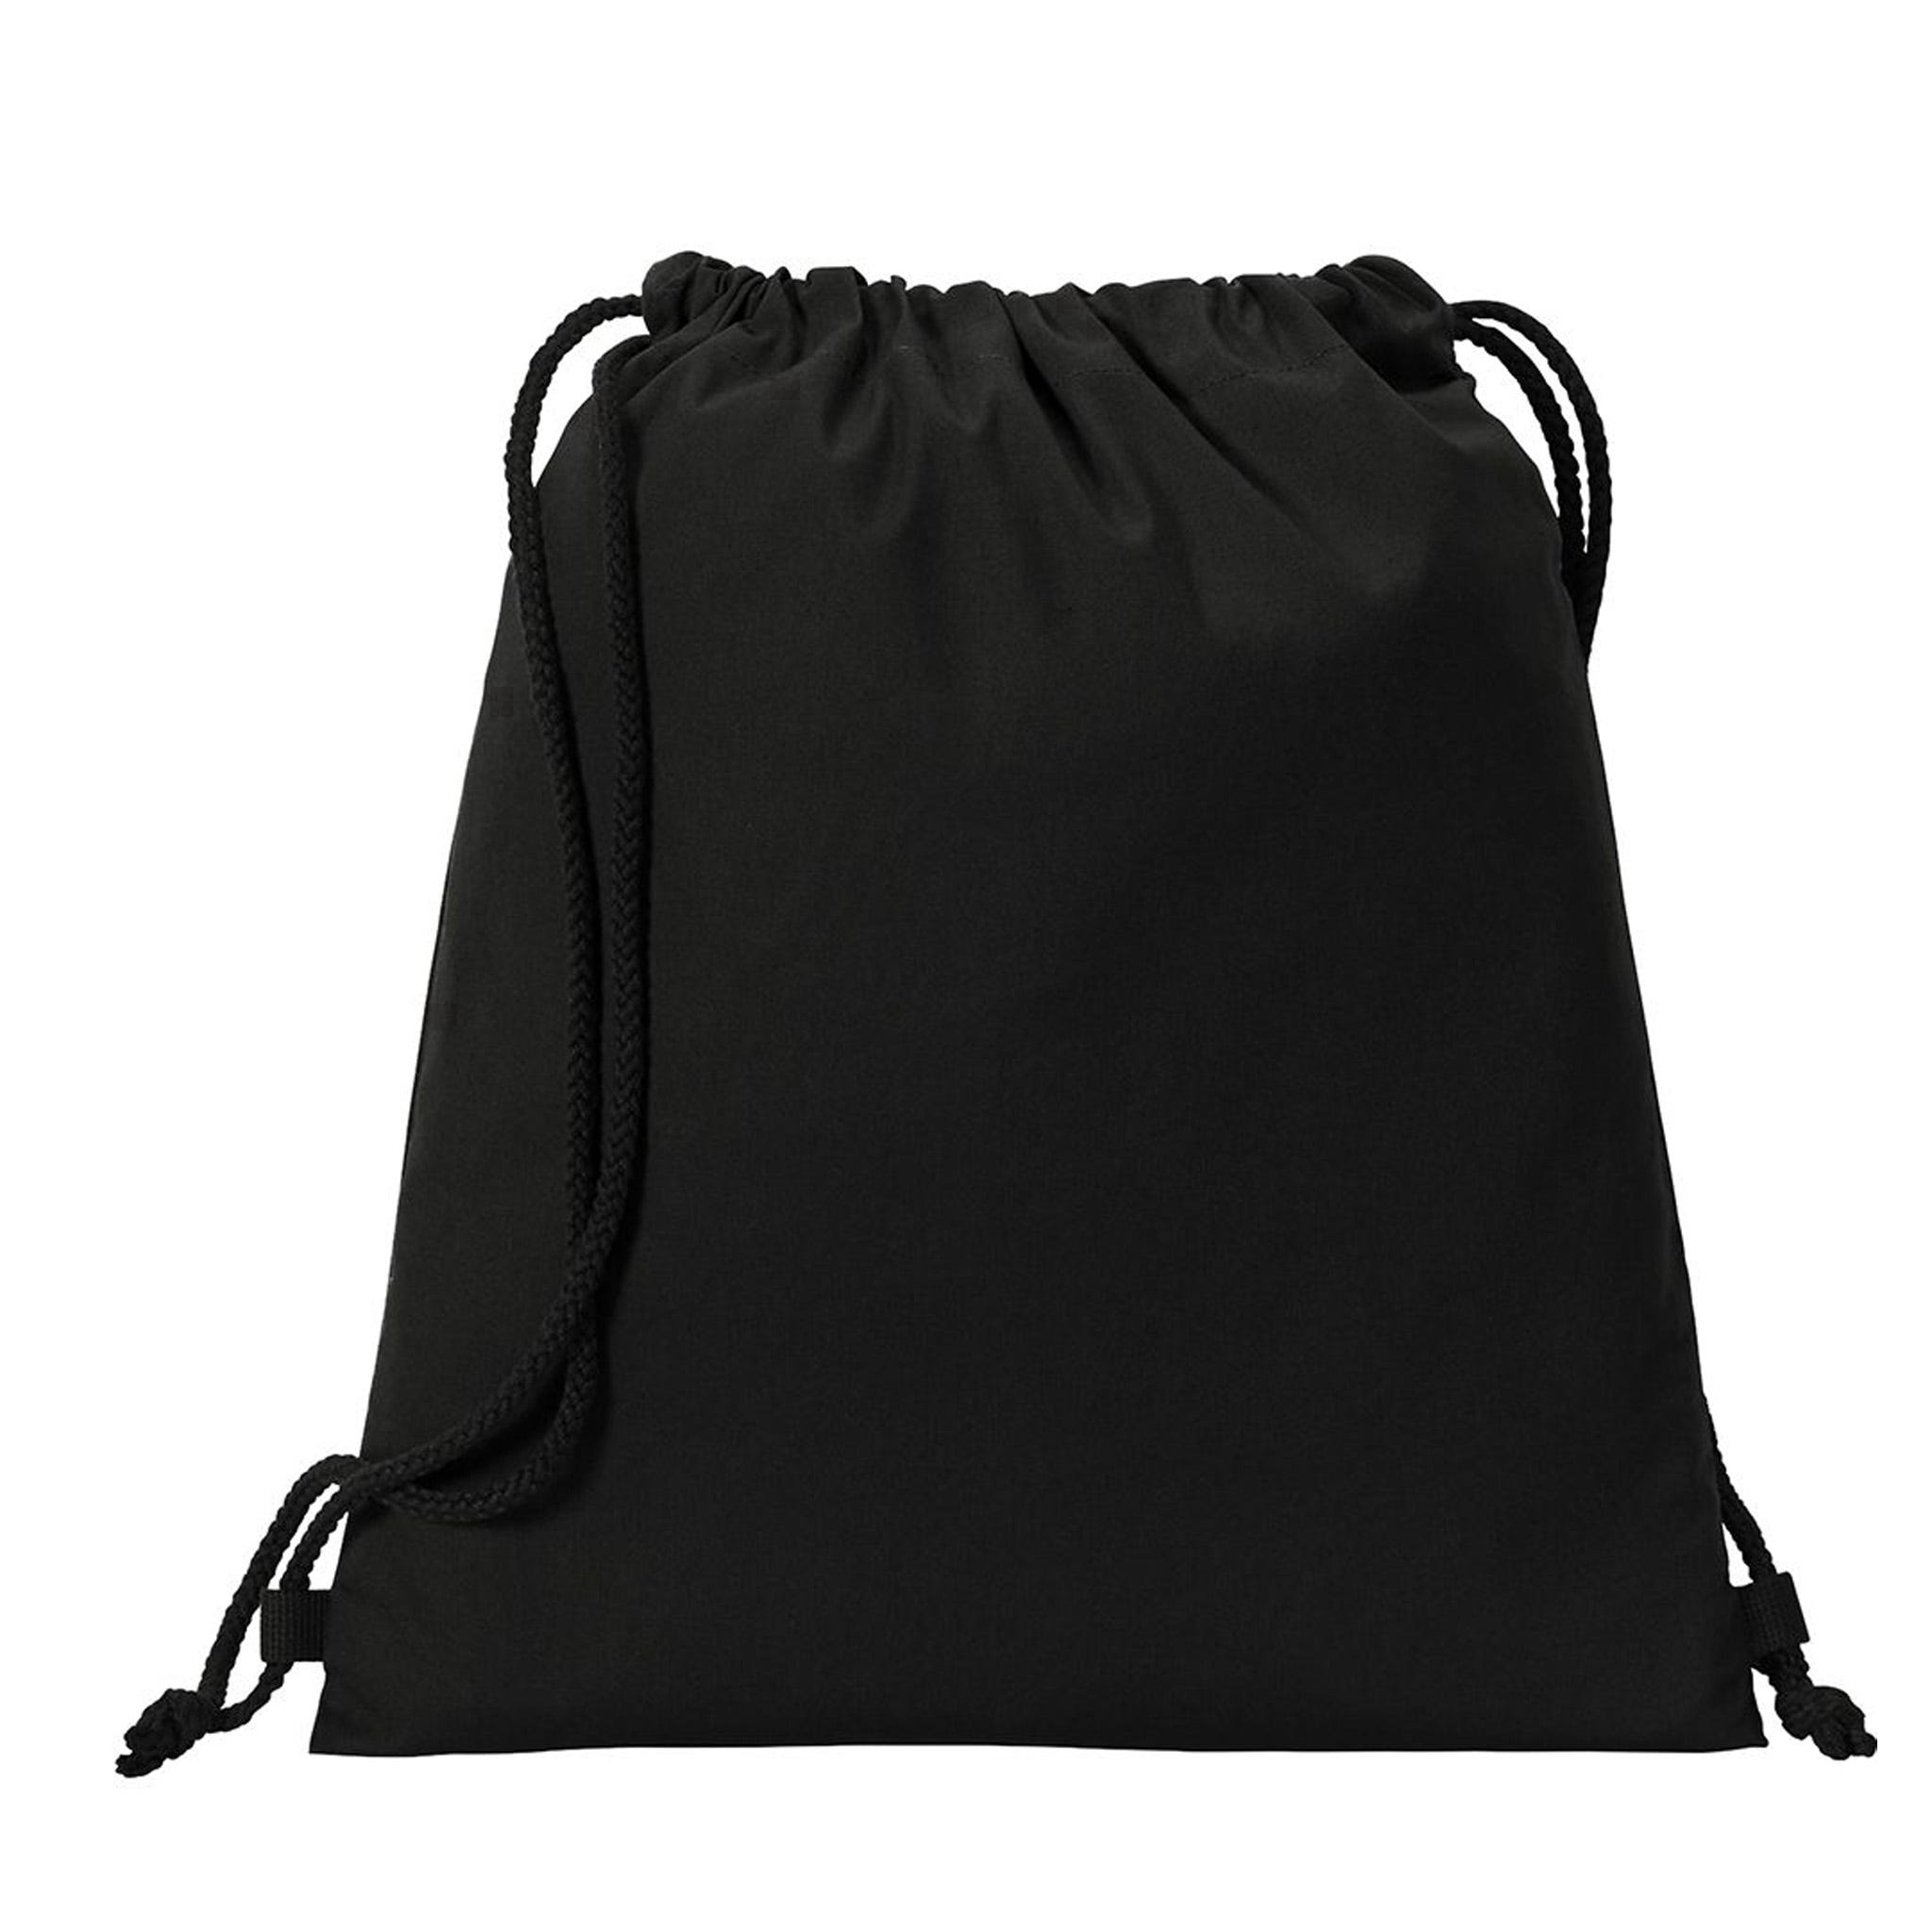 AKA Sorority Pretty Black And Educated Drawstring Bag